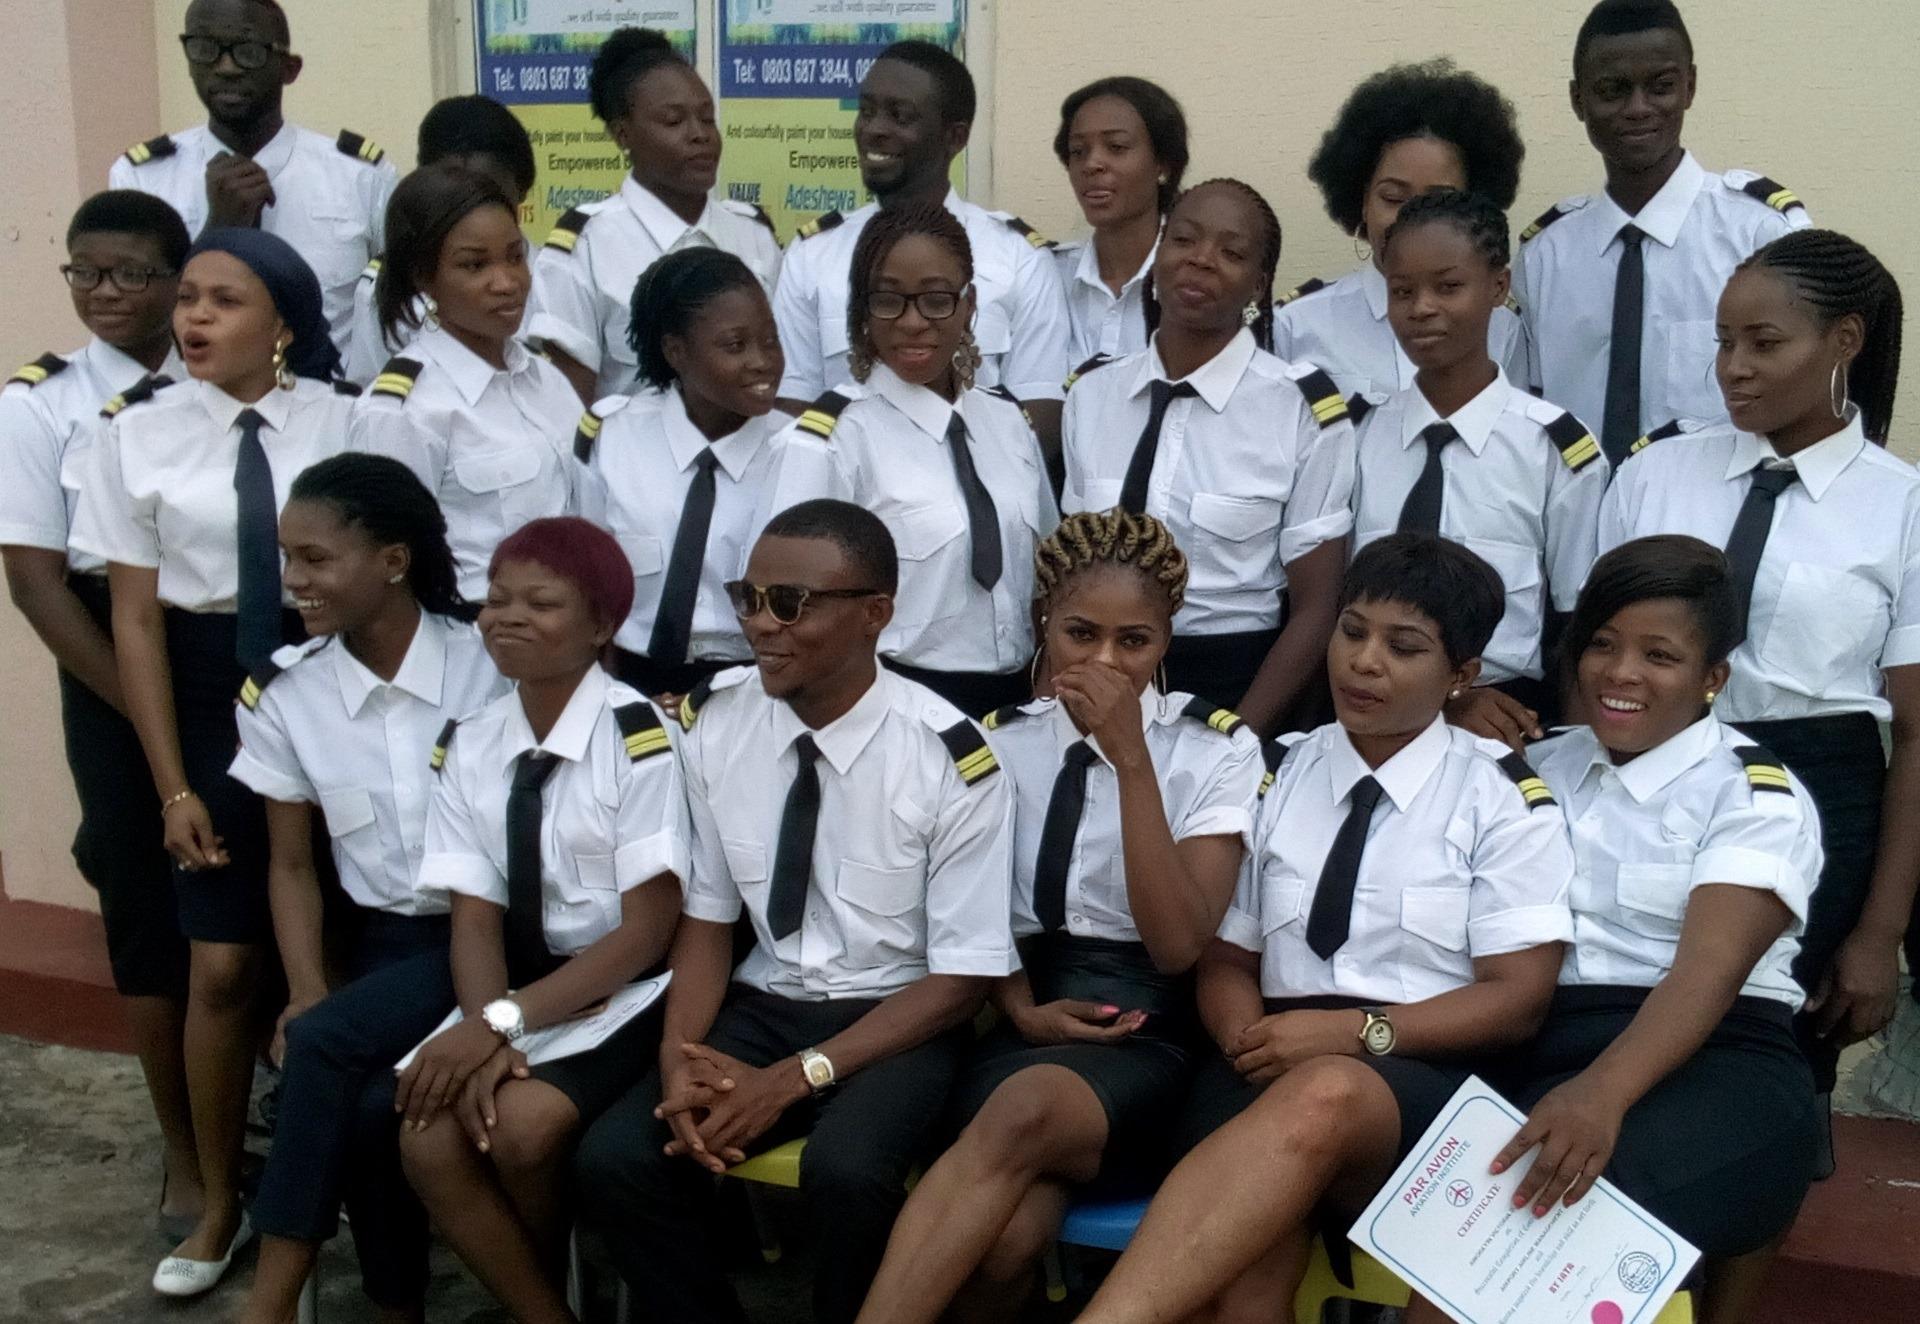 Aviation Schools in Nigeria